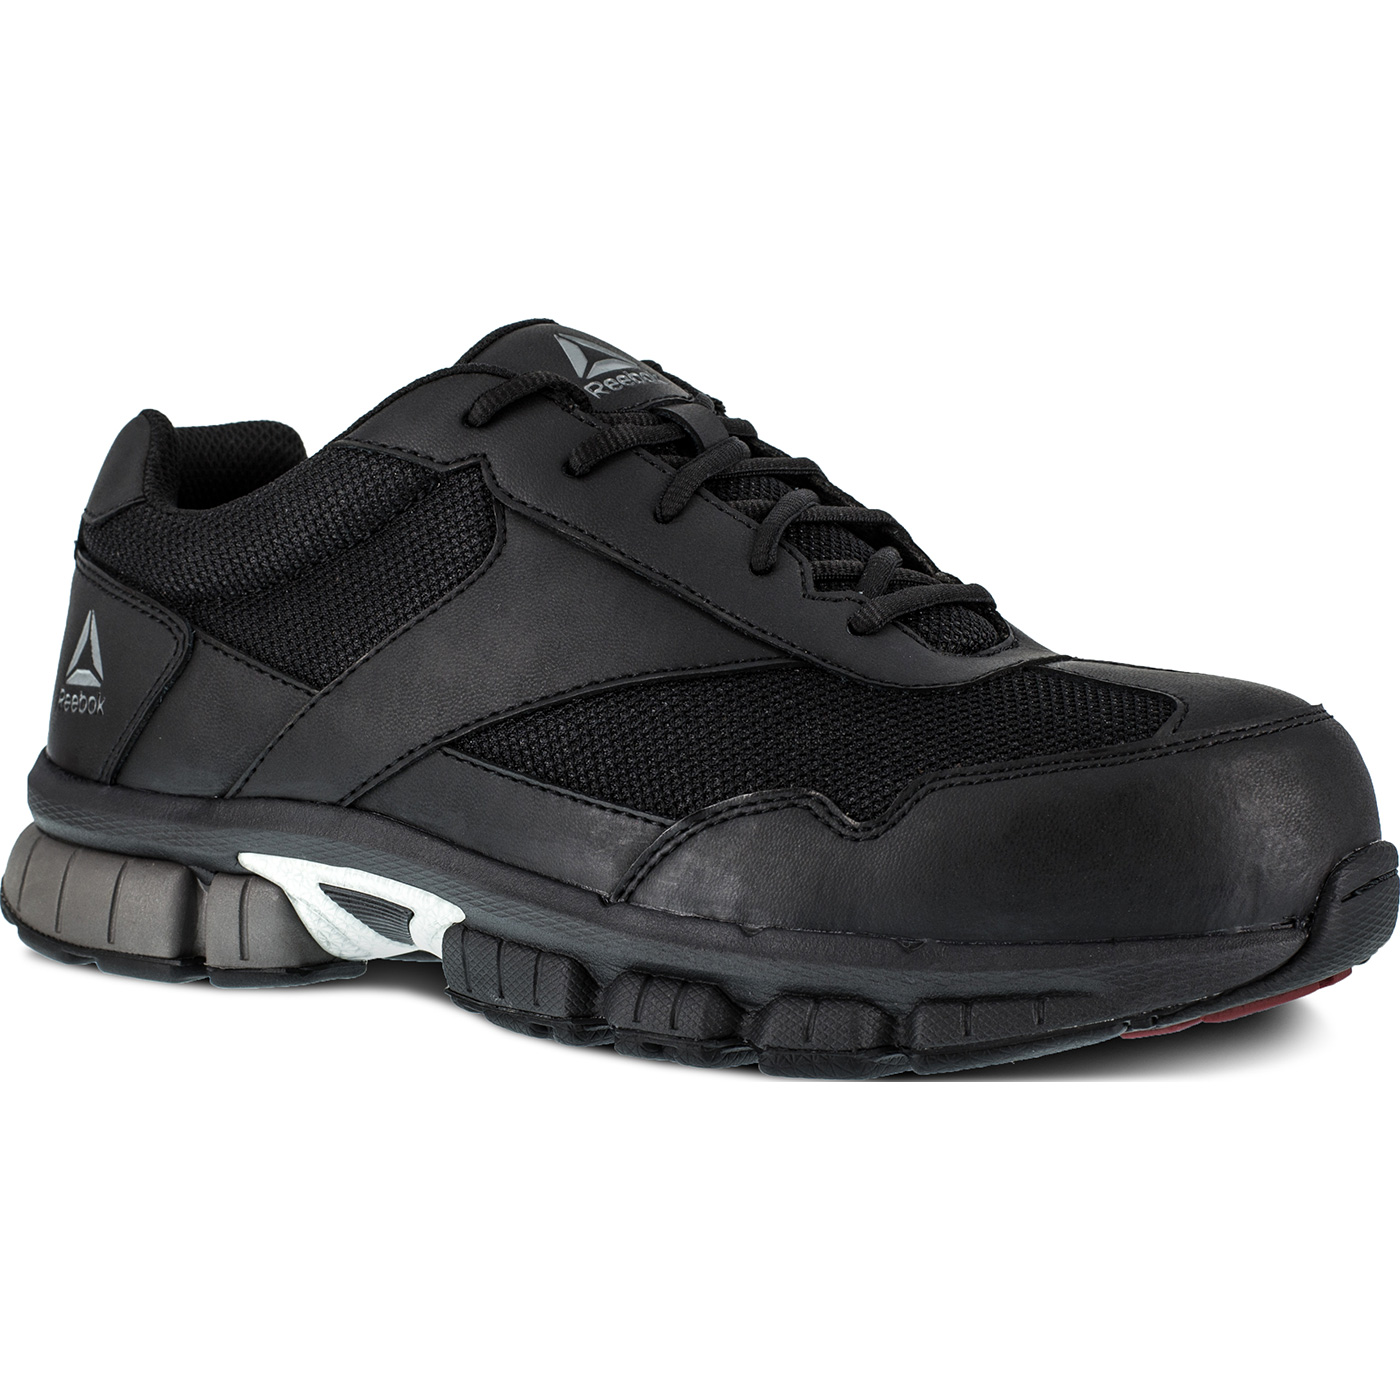 Reebok Ketia Composite Toe Work Athletic Shoe Size 10.5(W) - image 1 of 5